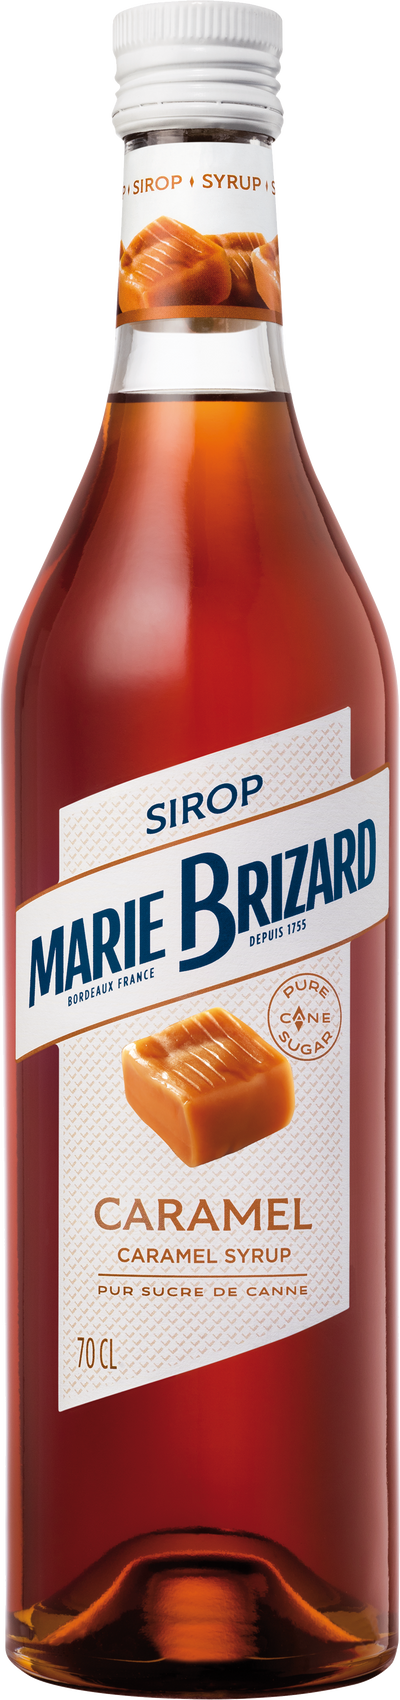 Sirop de gingembre - Marie Brizard